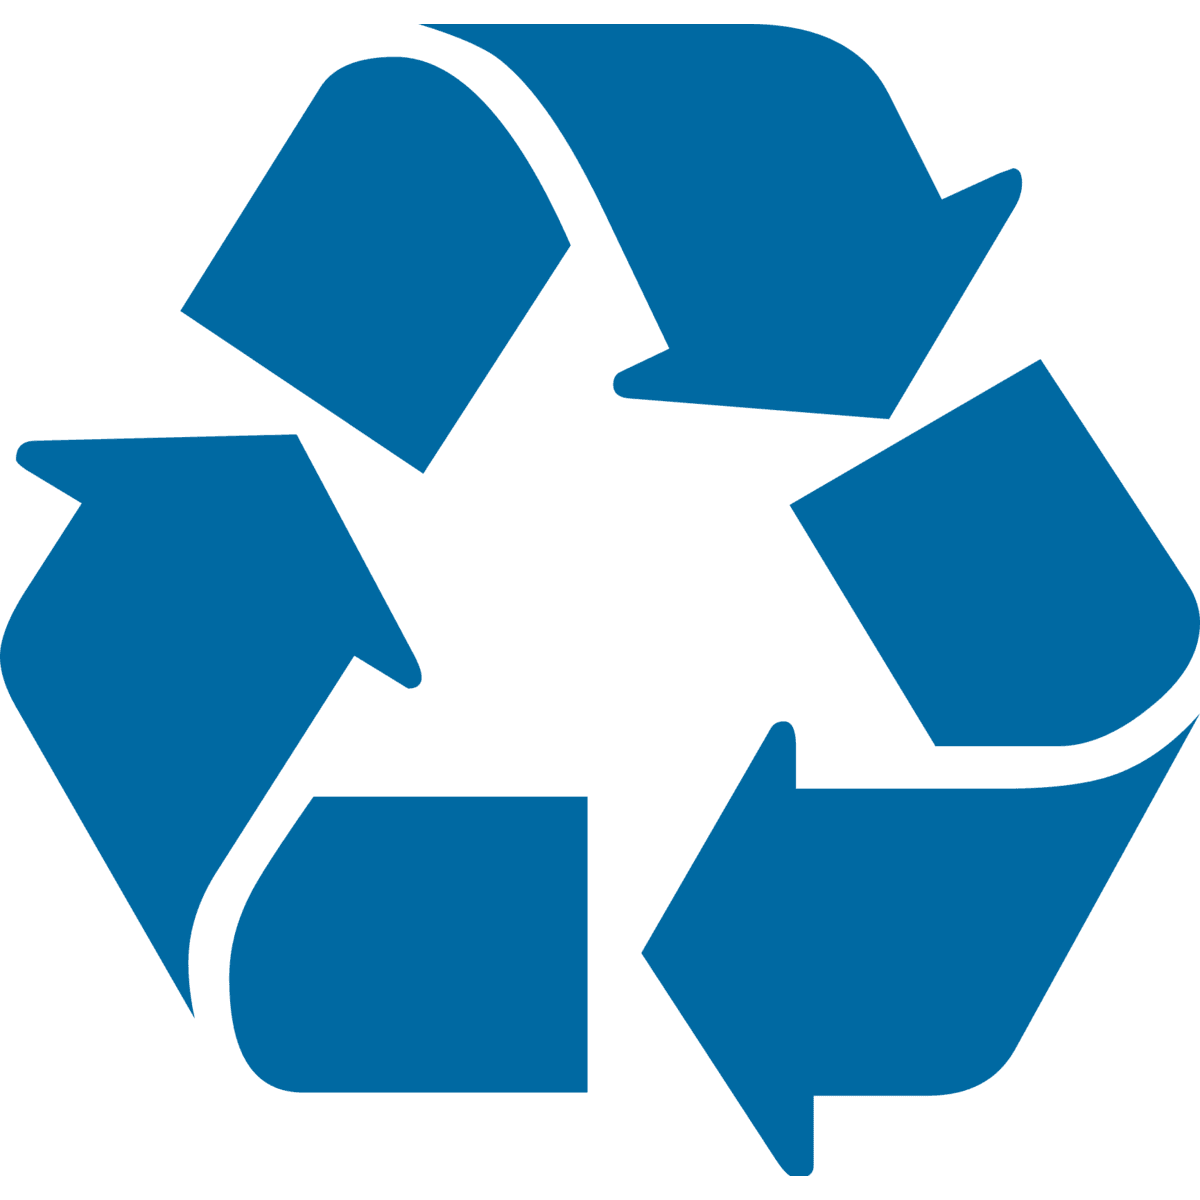 Recycle Logo Symbol Recycling Bin Free Download Image PNG Image